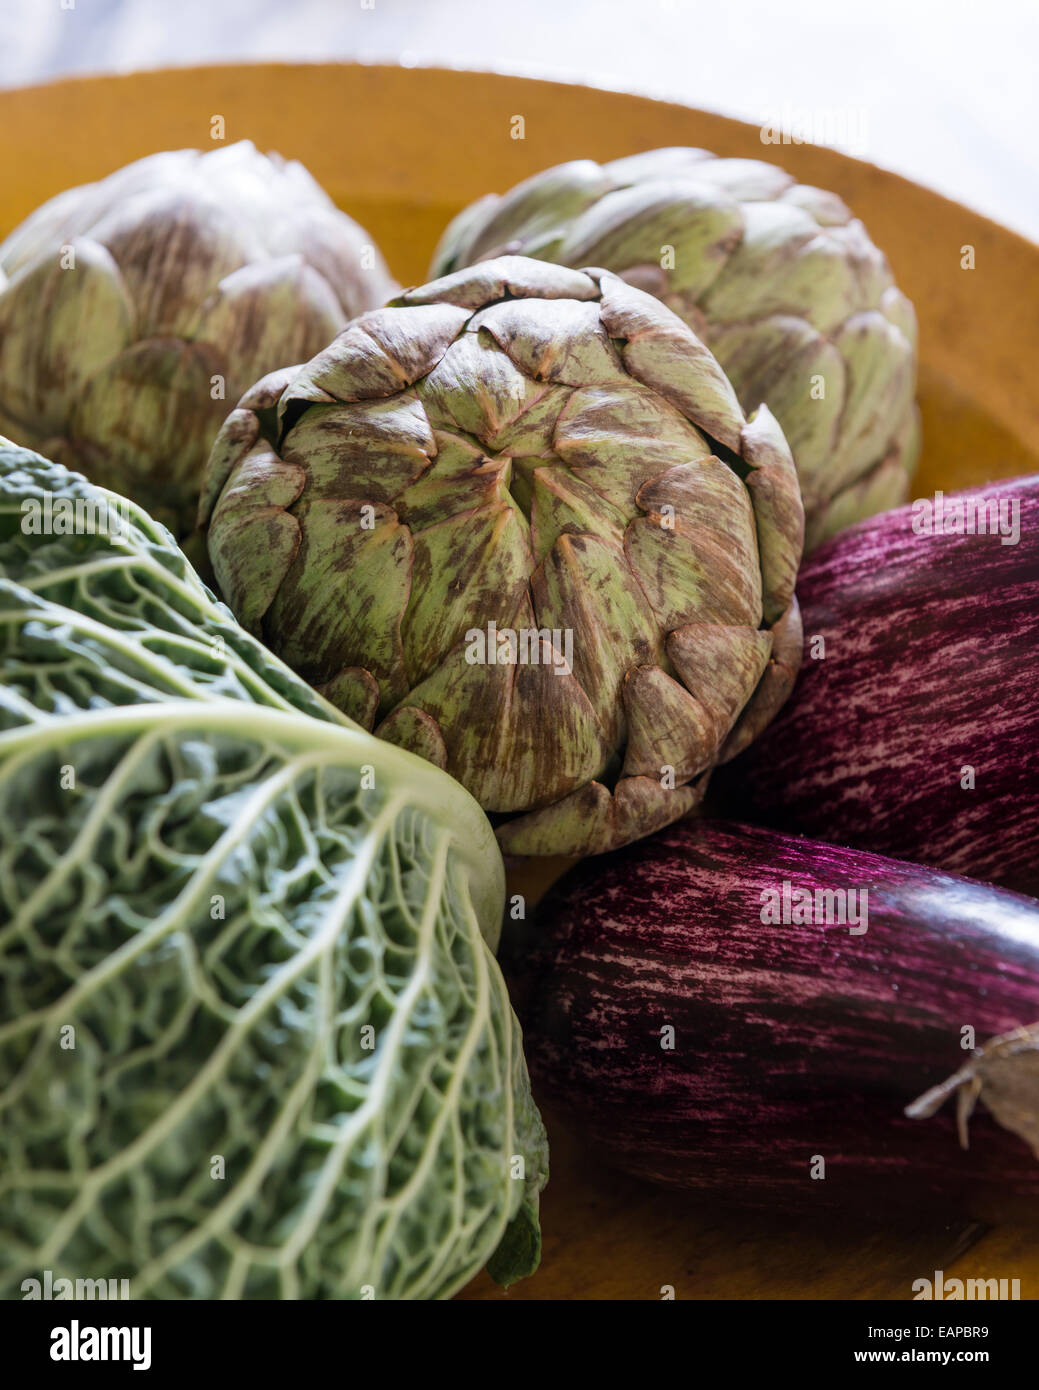 Artichokes, cabbage and aubergines in ceramic dish Stock Photo